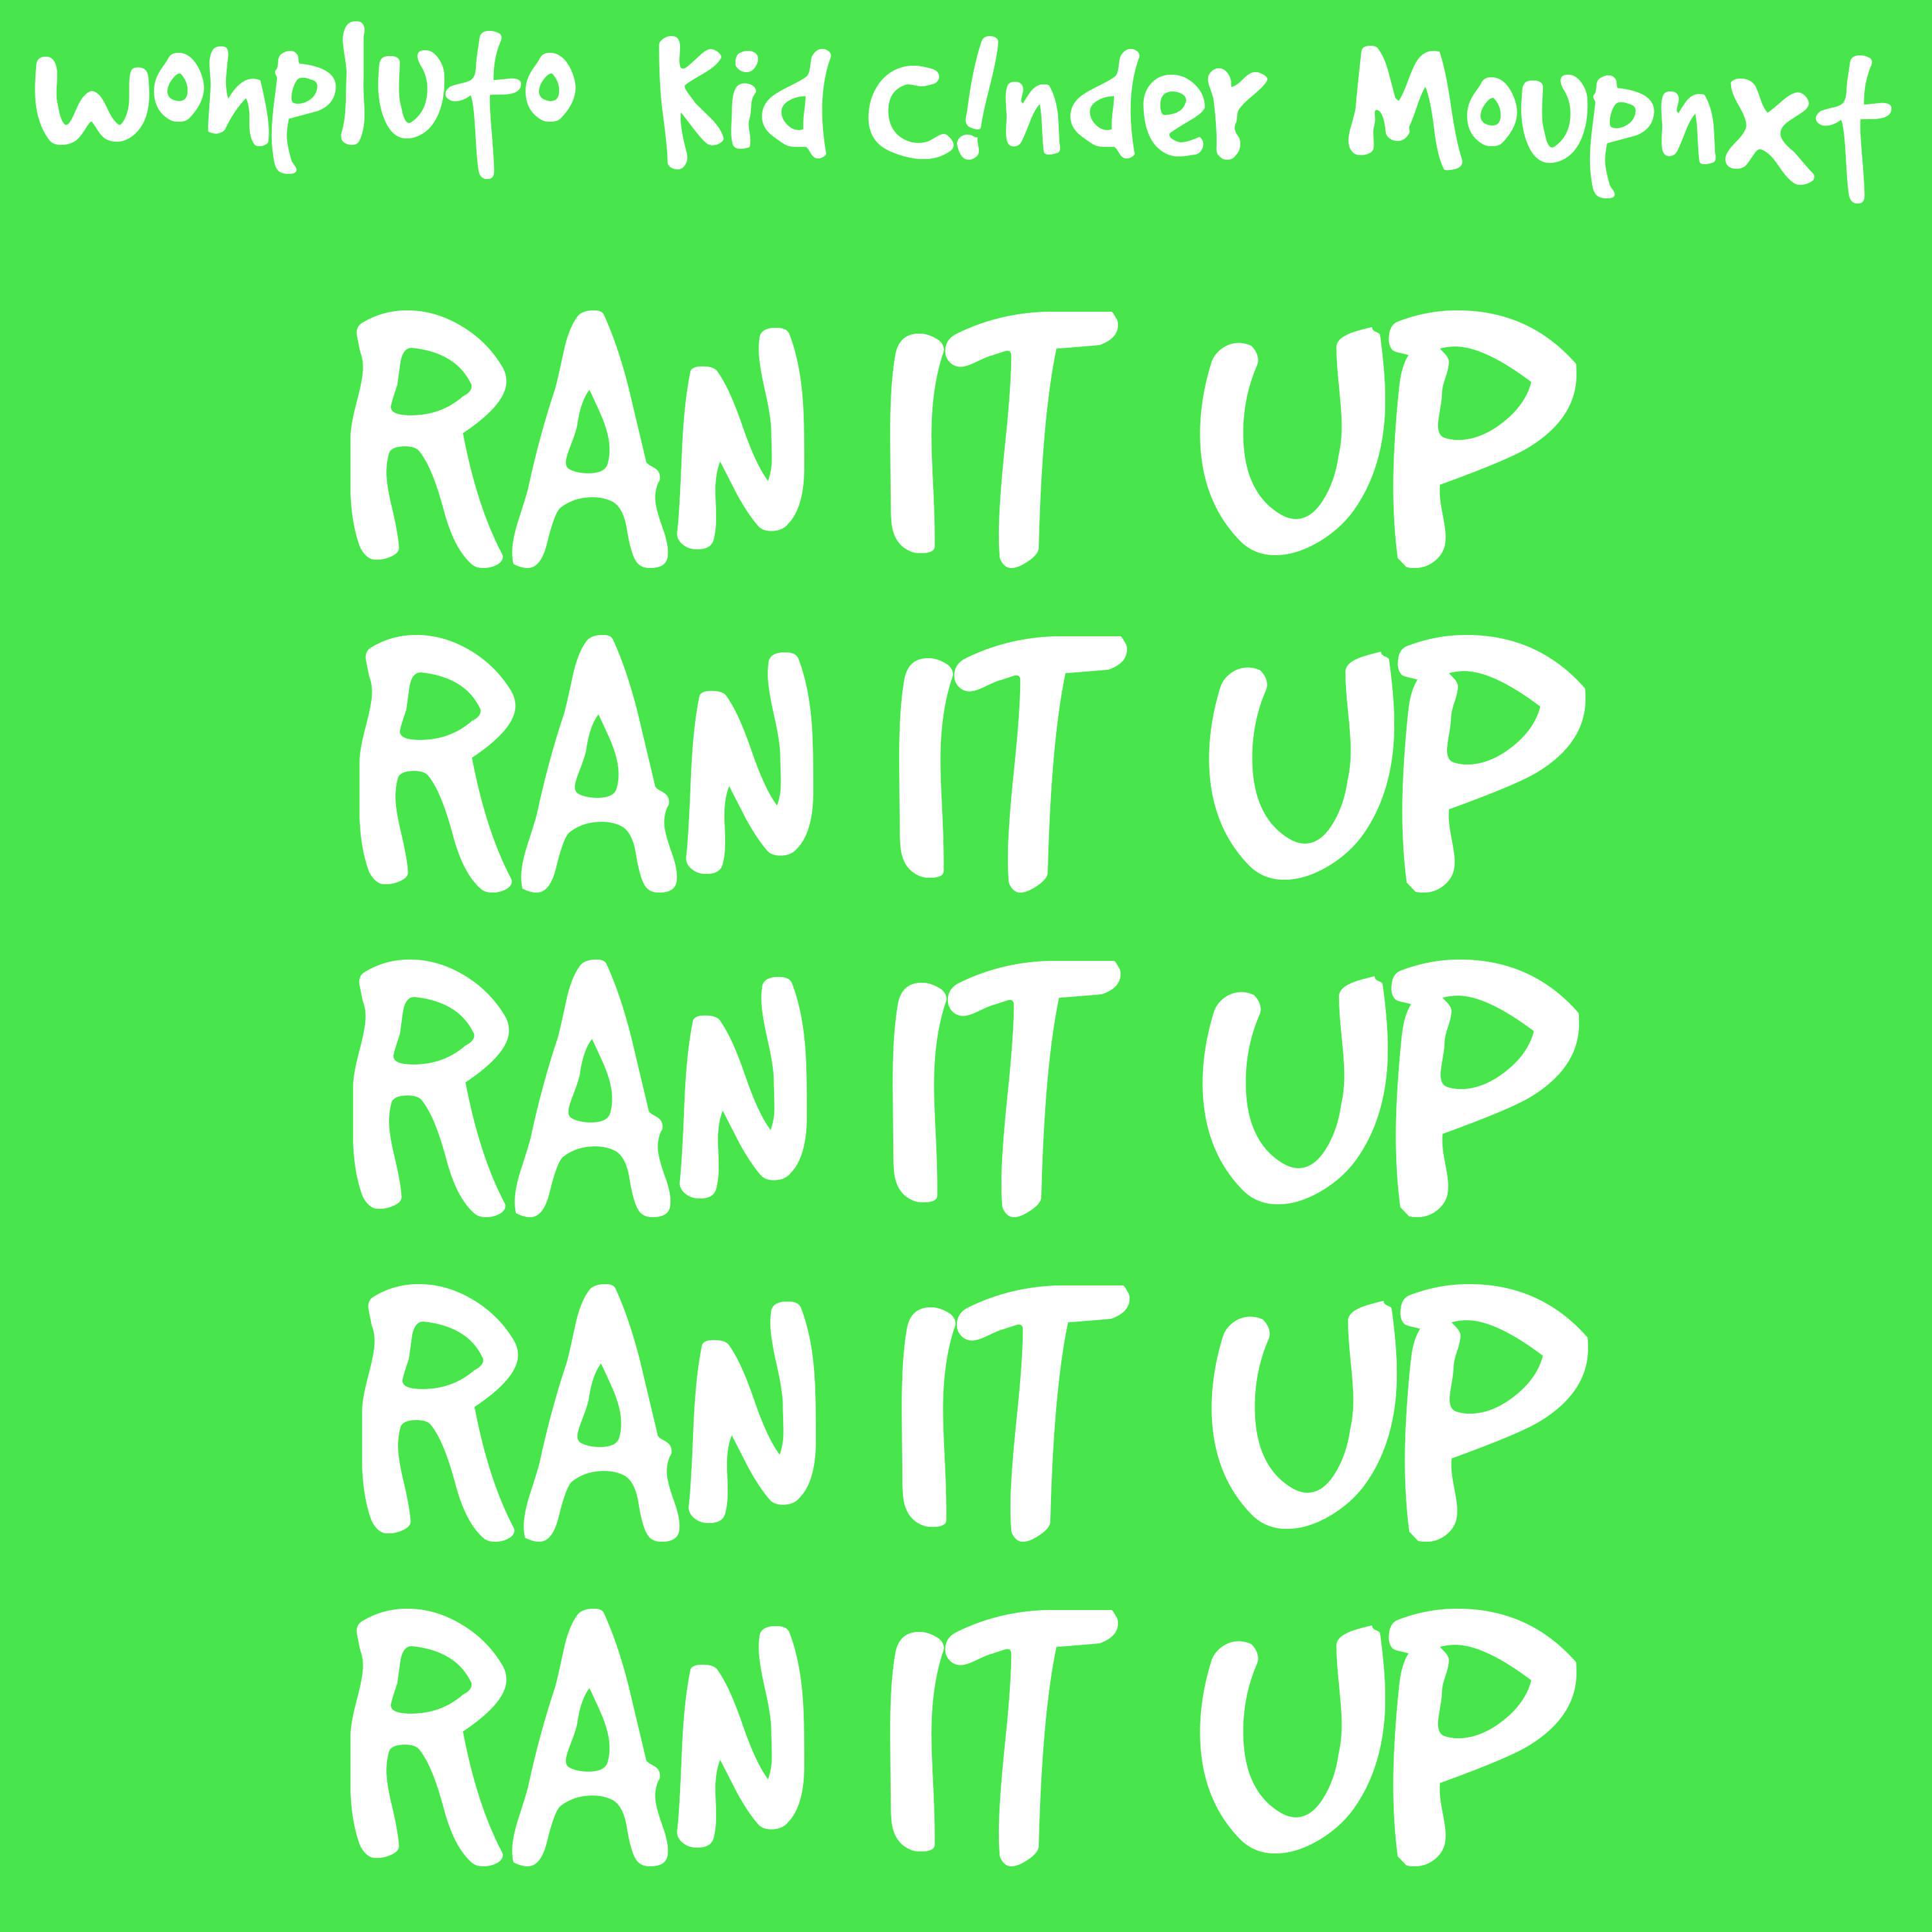 wohpluto - Ran It Up (feat. Kid C!nder & Moupnxt)